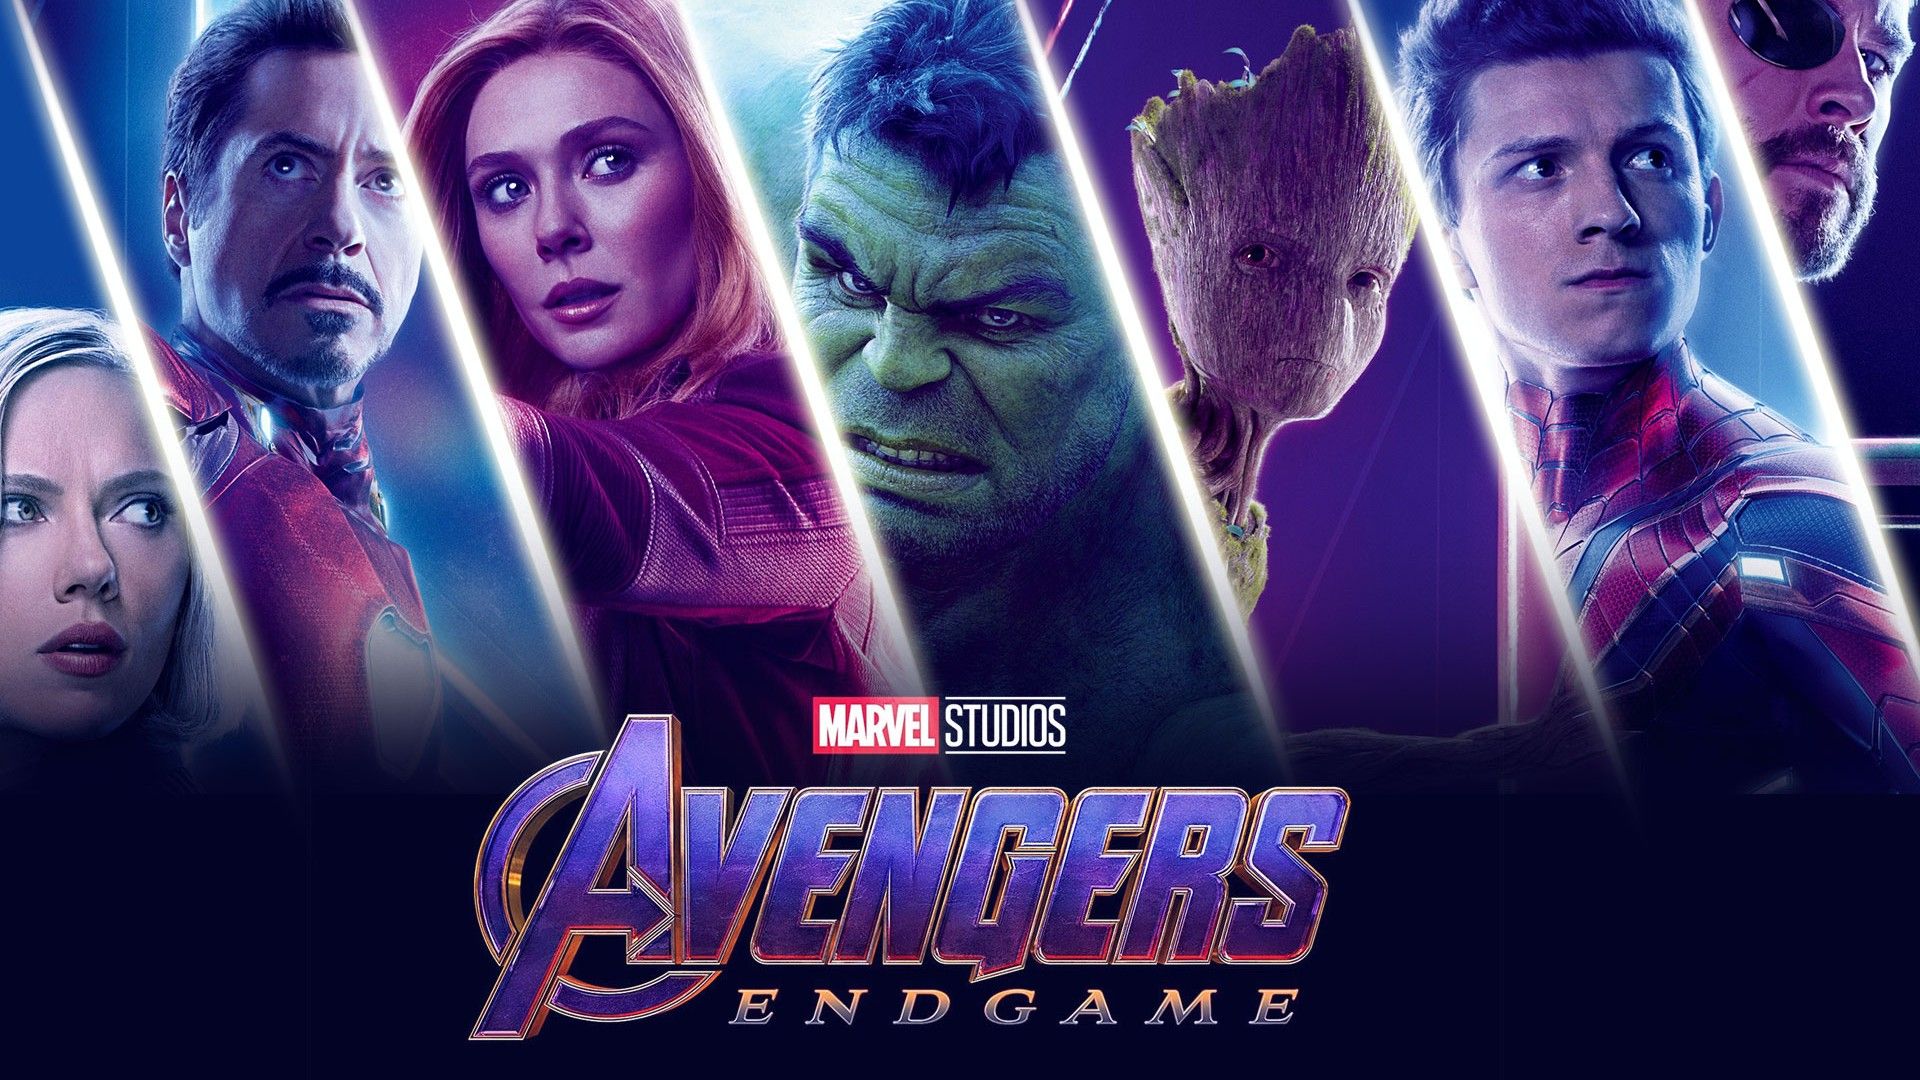 Wallpaper Avengers Endgame Movie Poster Wallpaper HD. Avengers, Marvel movies, Highest grossing movies